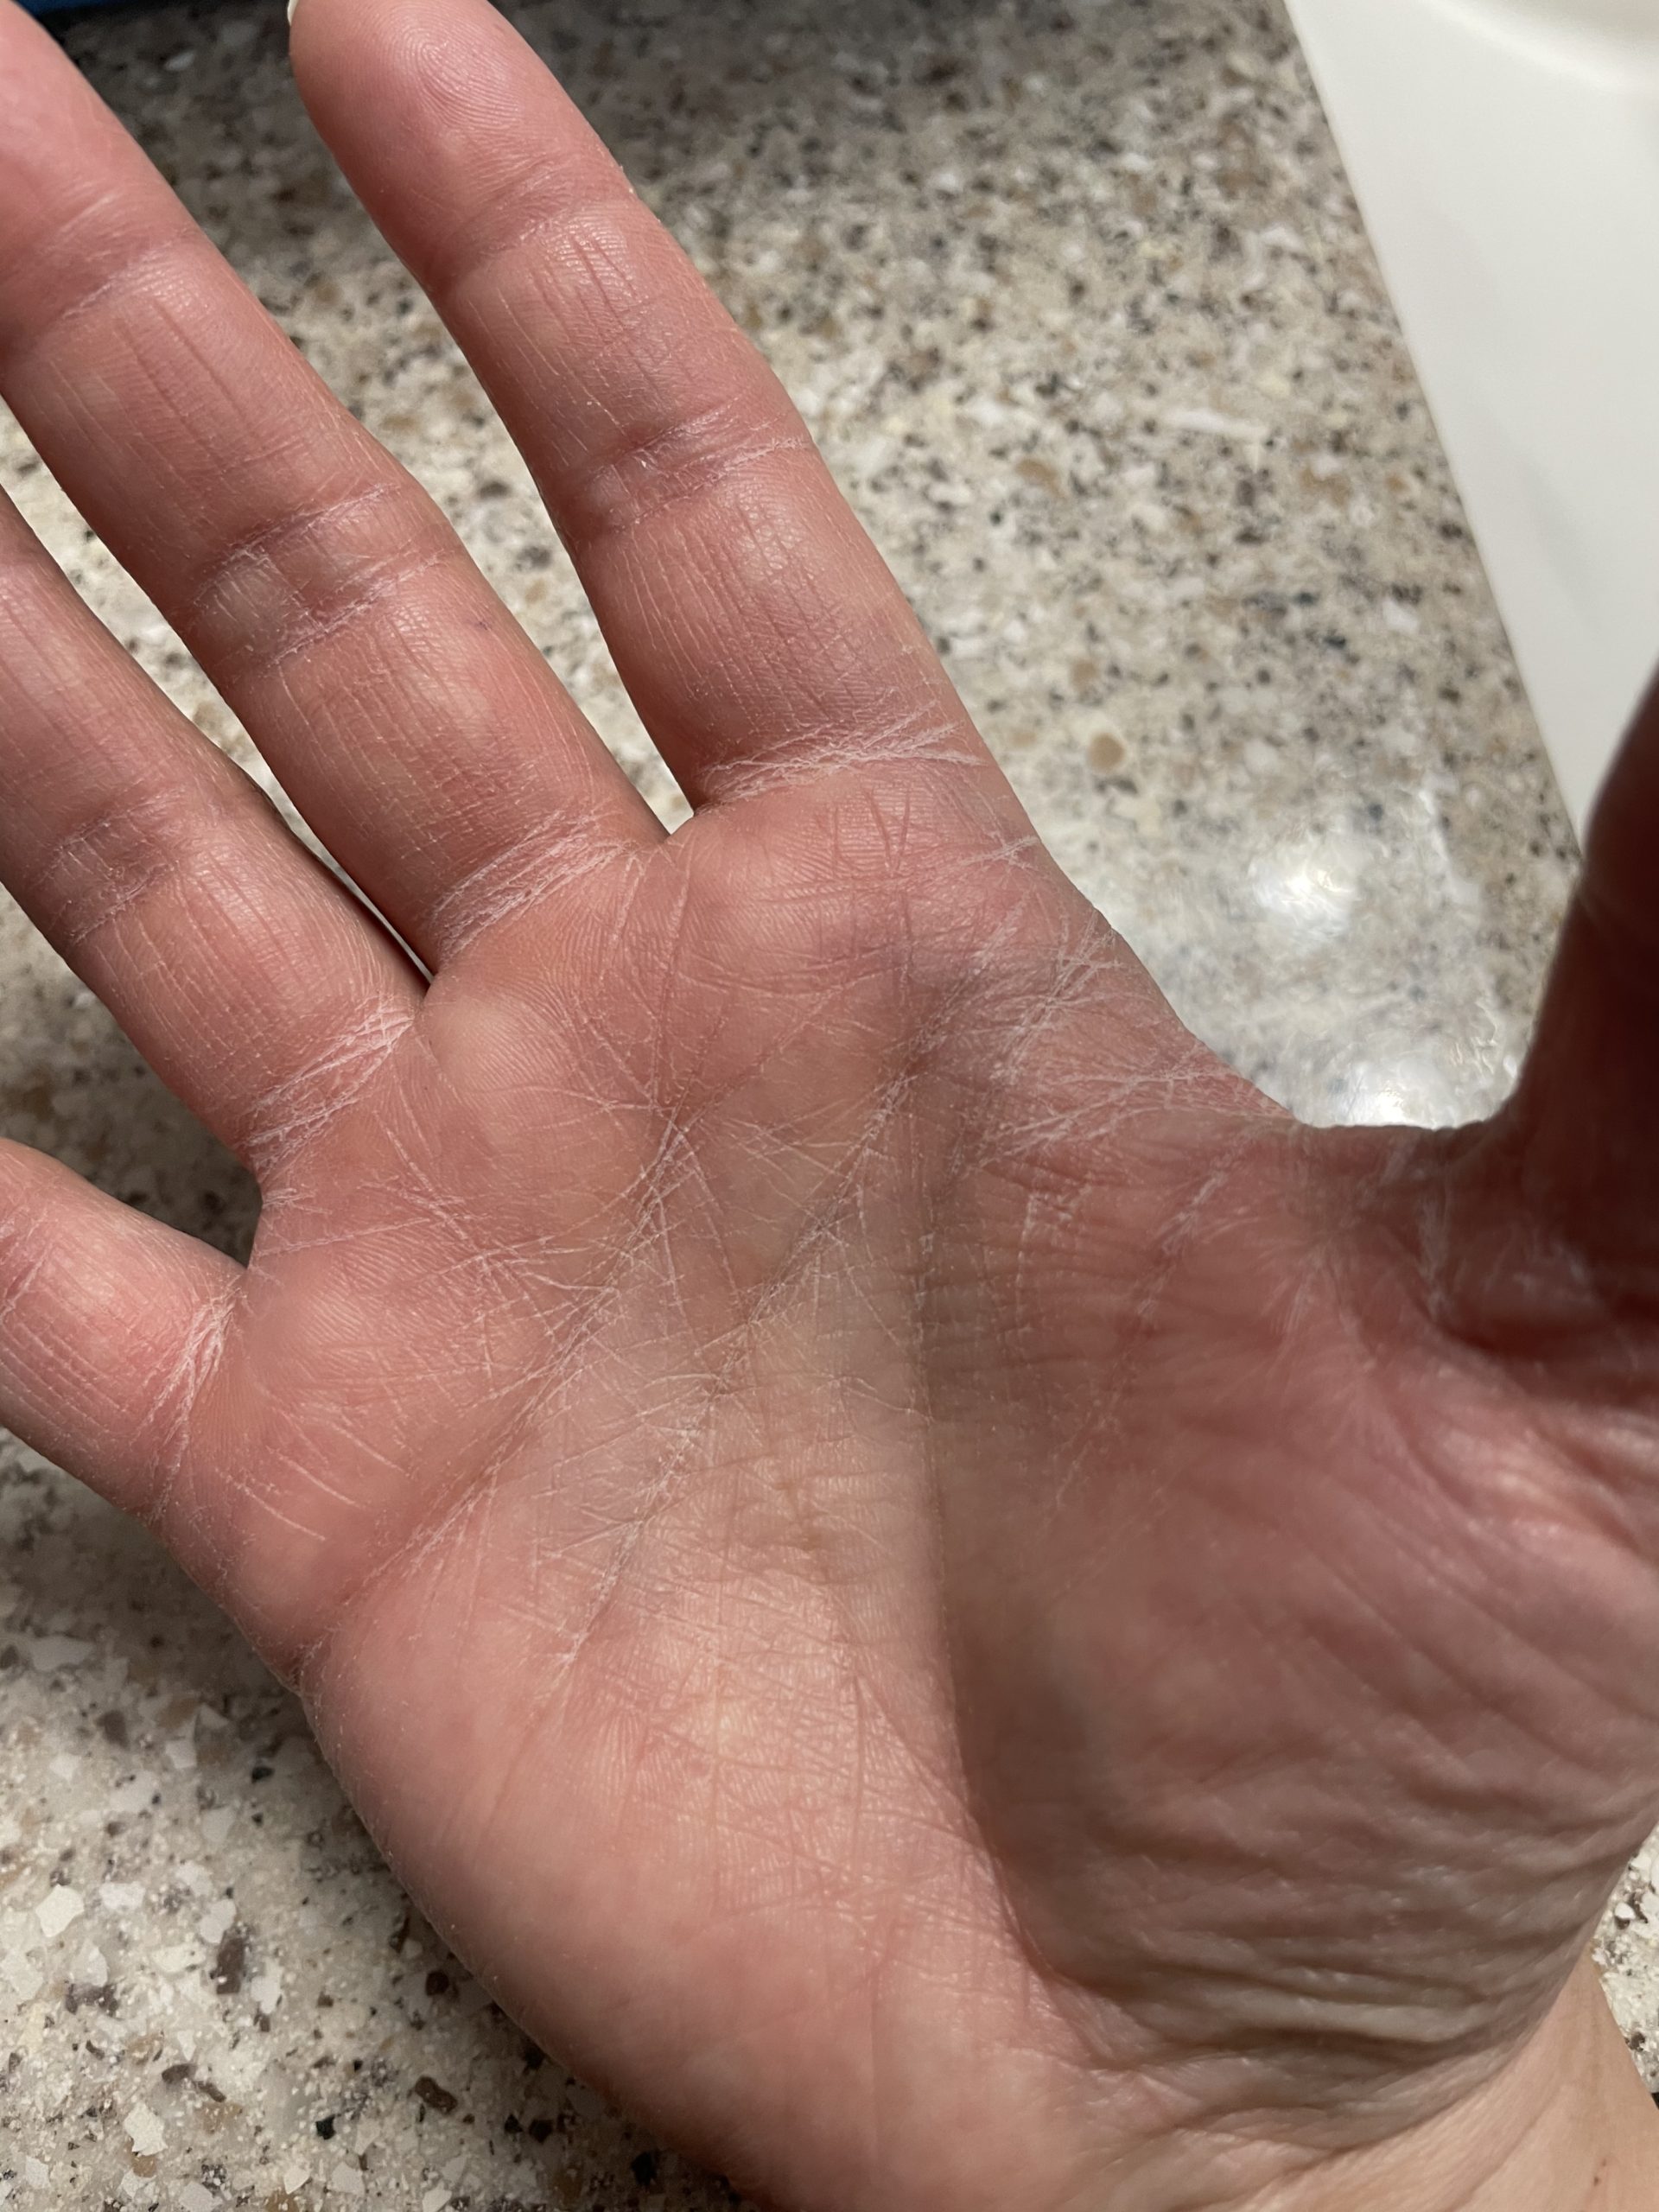 Dry hand